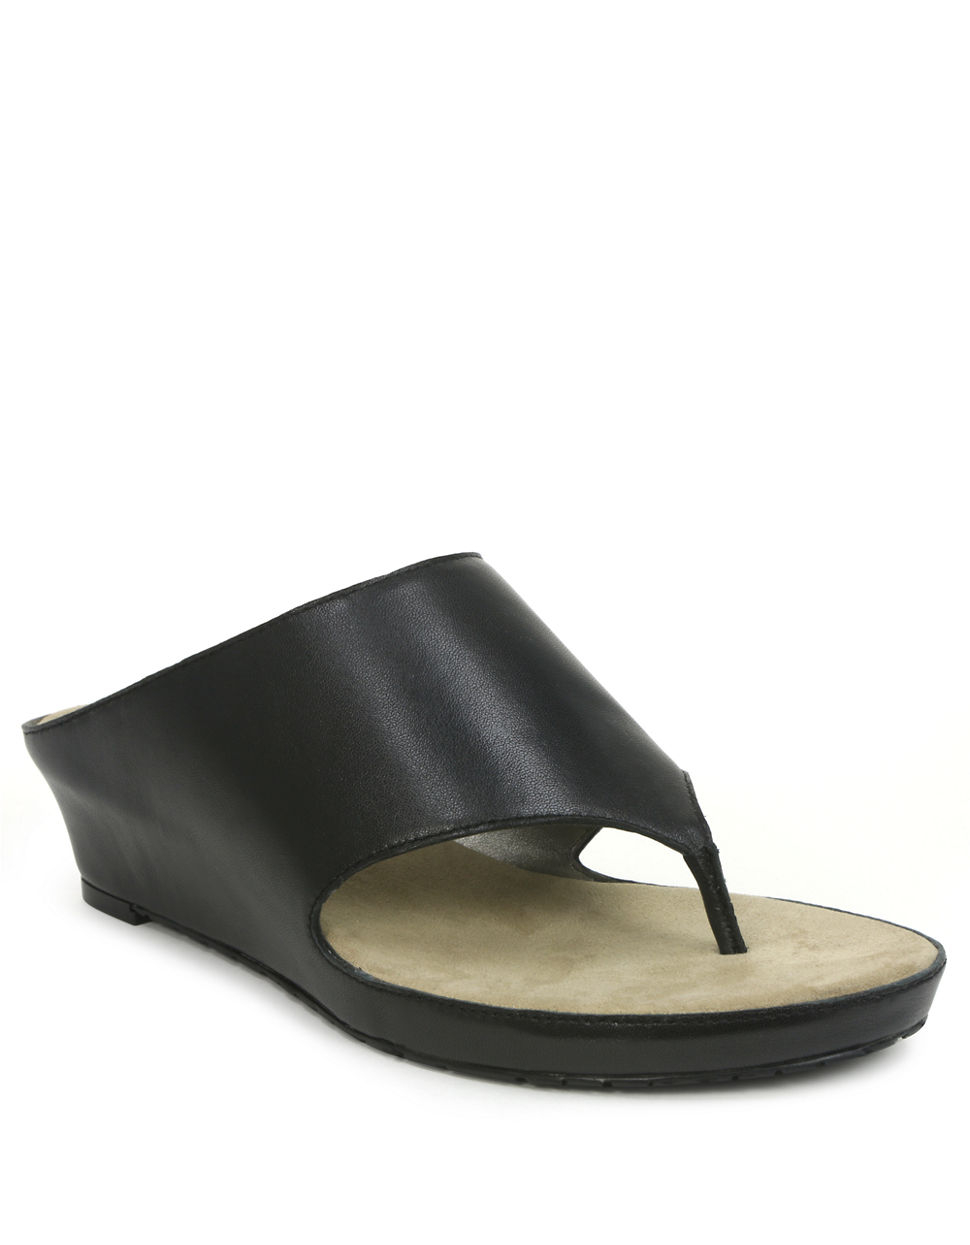 Tahari Mindy Leather Slide Wedge Sandals in Black | Lyst